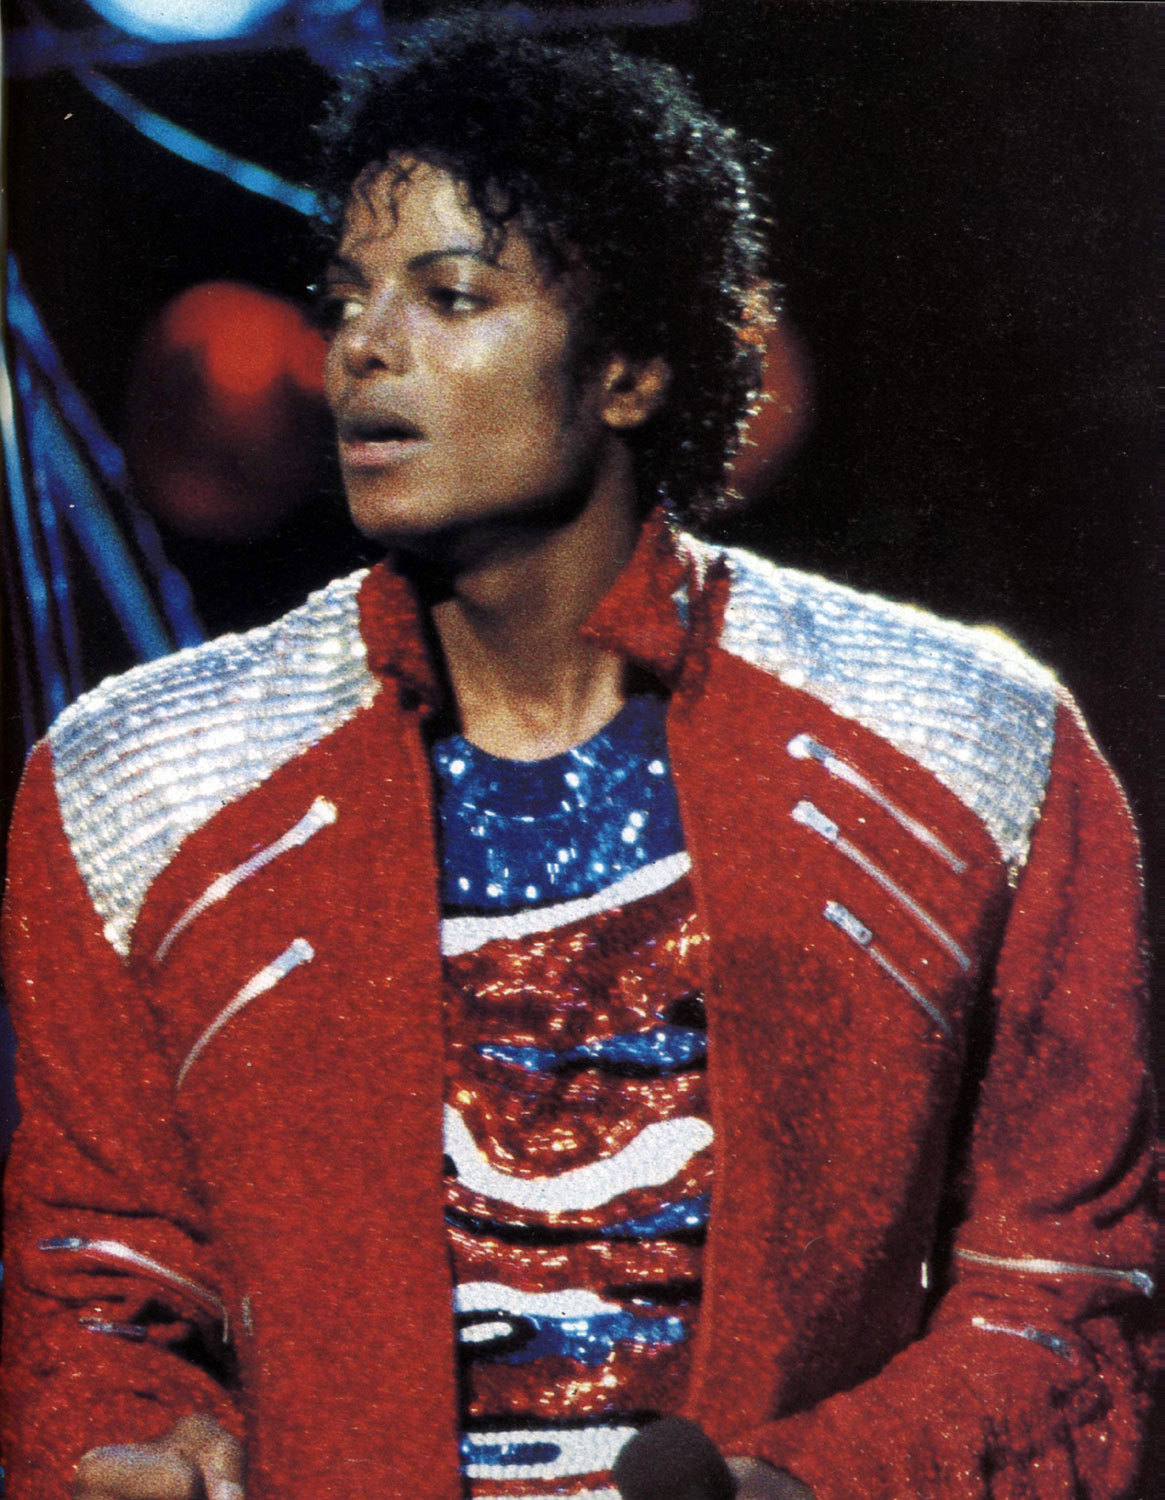 The glove of Michael Jackson in Moonwalker (Retrospective)